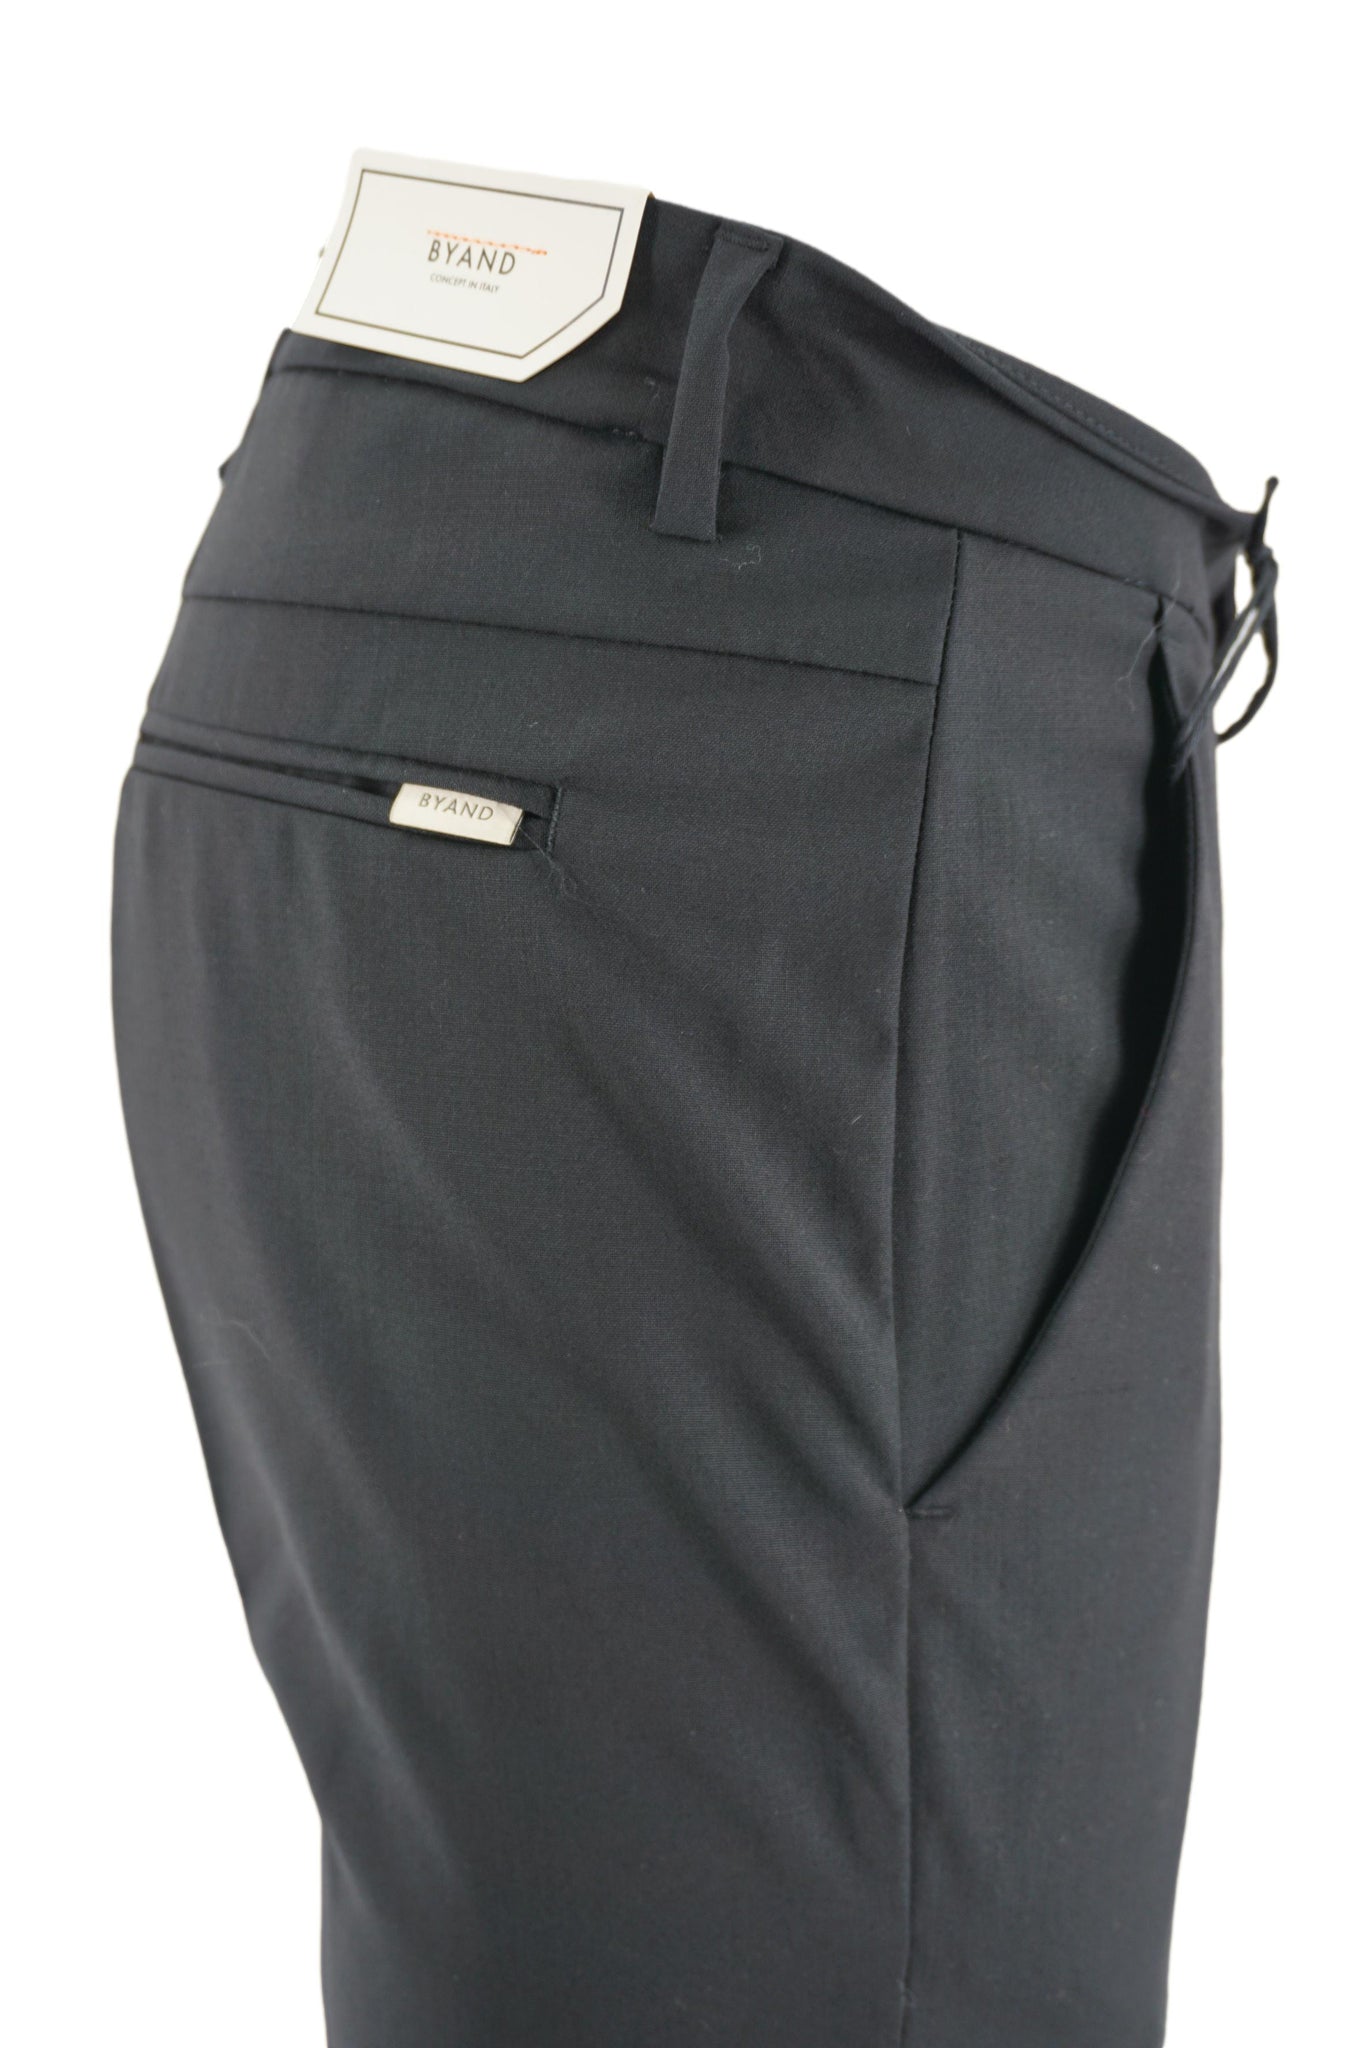 Pantalone Elegante Modello Montecarlo / Nero - Ideal Moda